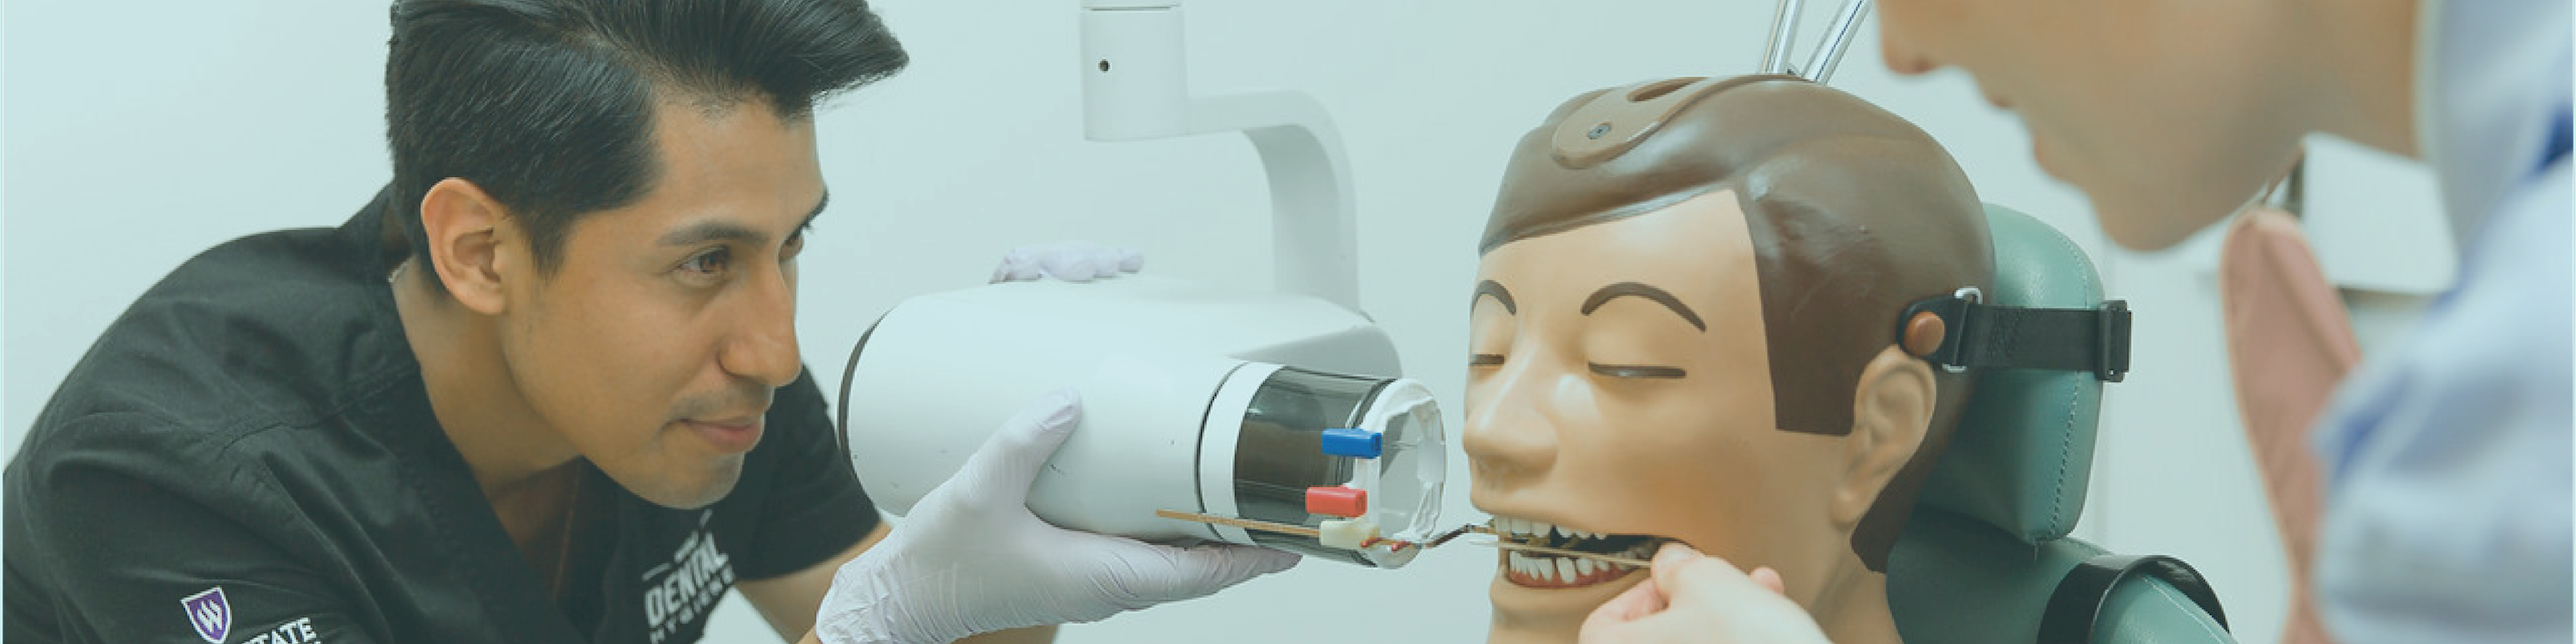 dental hygiene image